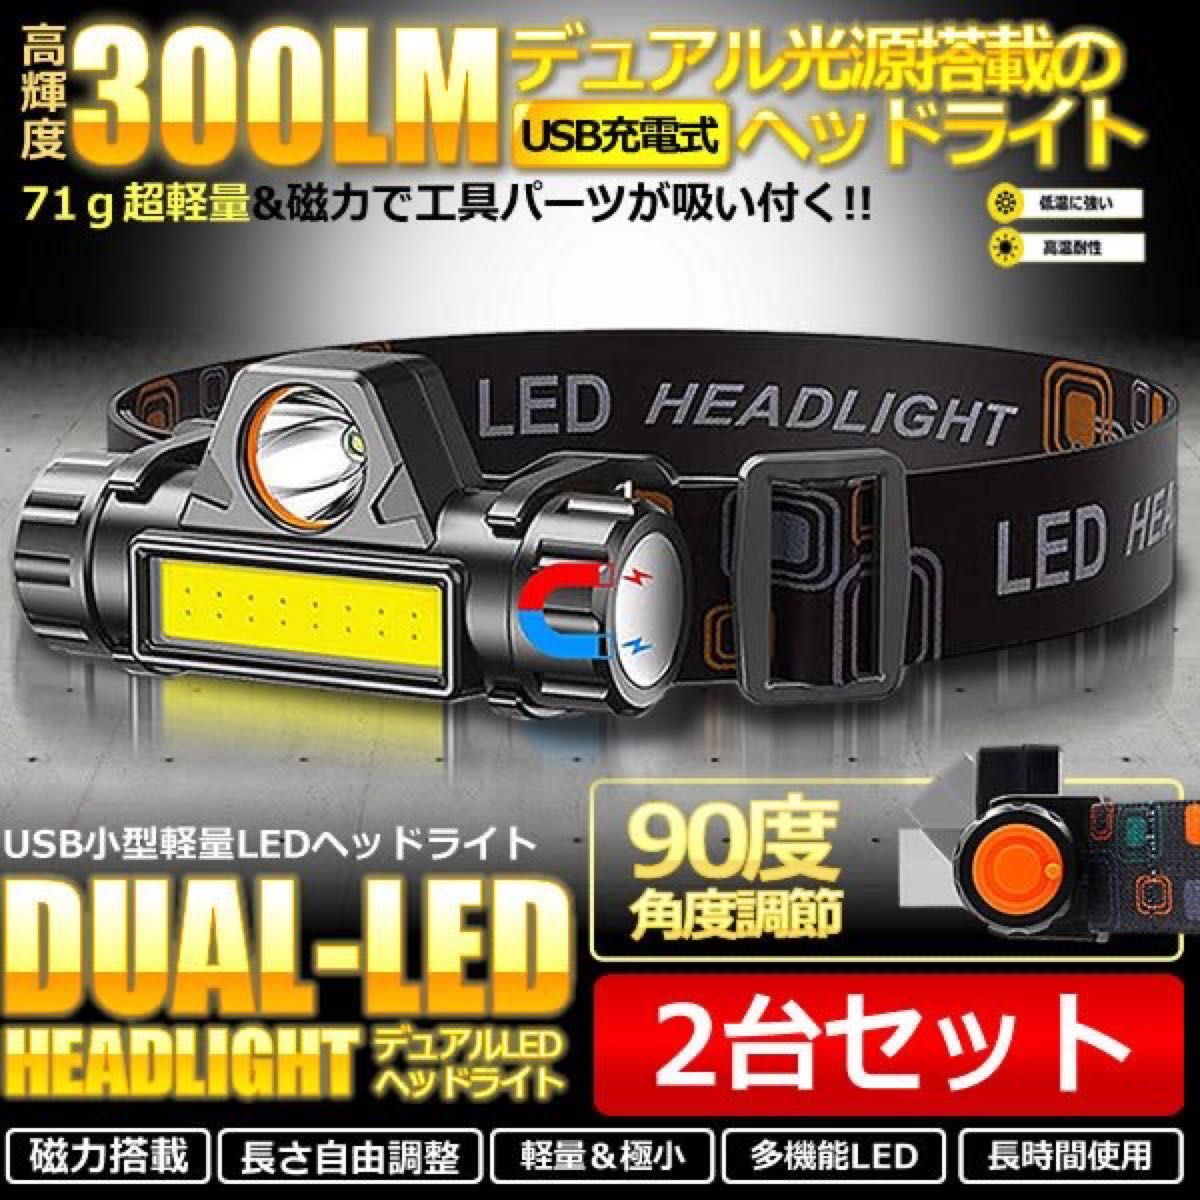 LED ヘッドライト 2台セット キャンプ 夜釣り アウトドア 夜間作業 防災 磁石 高輝度 防水 夜間作業灯 USB充電